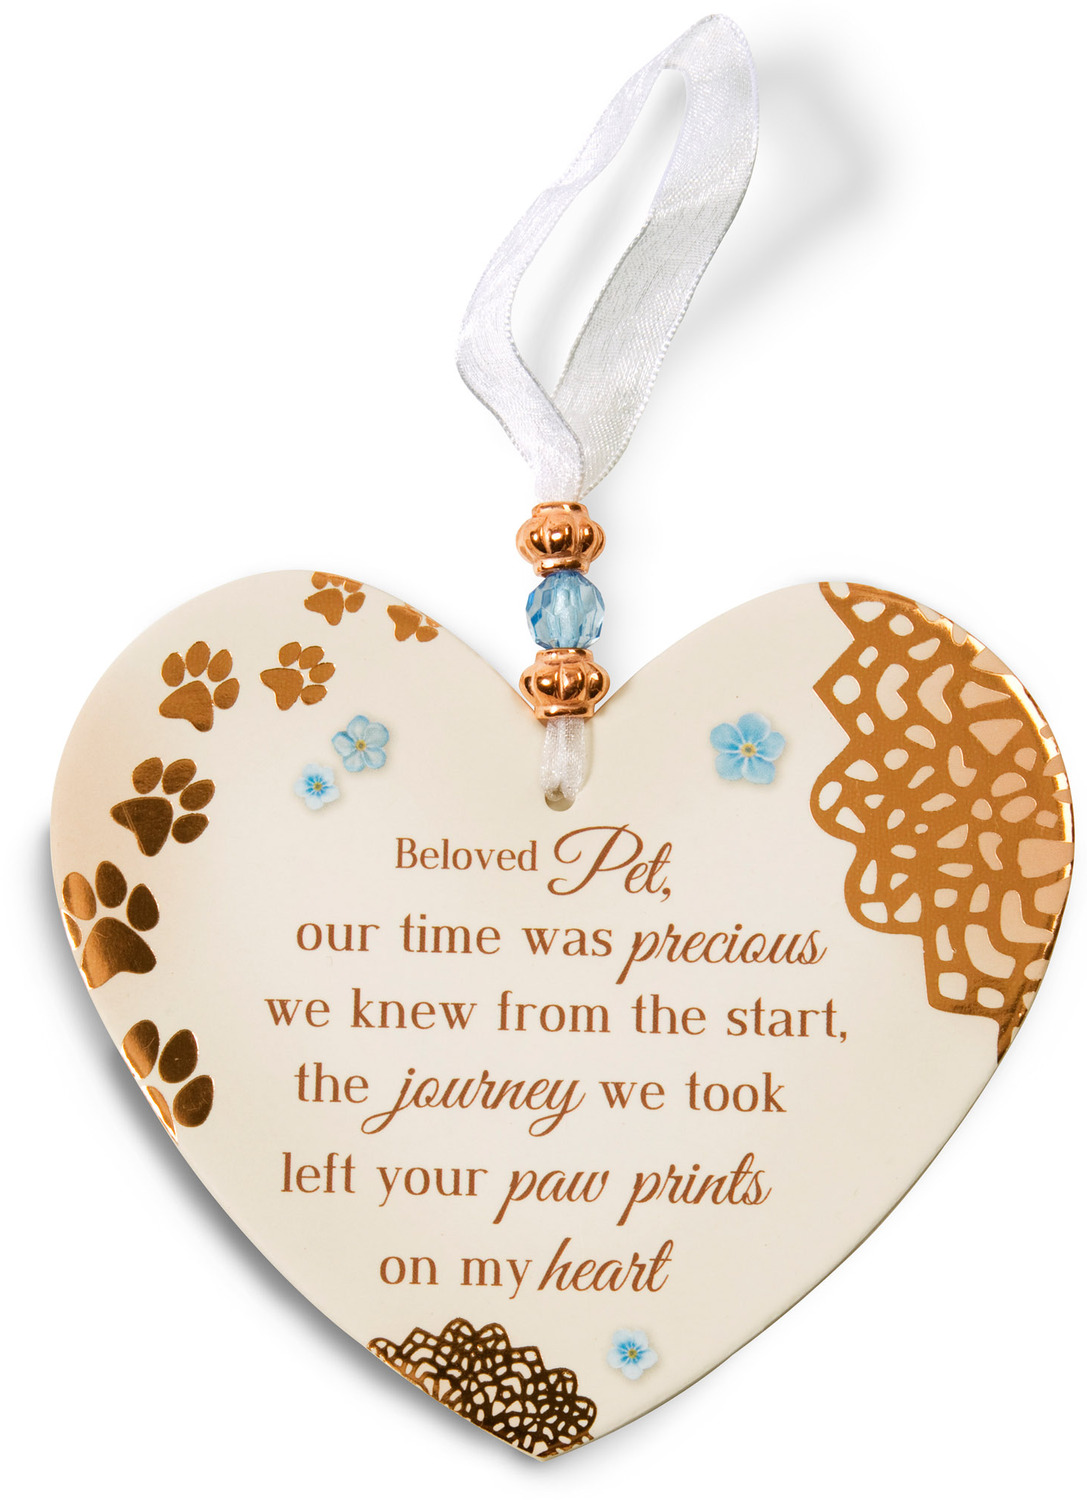 Beloved Pet by Light Your Way Memorial - Beloved Pet - 3.5" x 4" Heart-Shaped Ornament